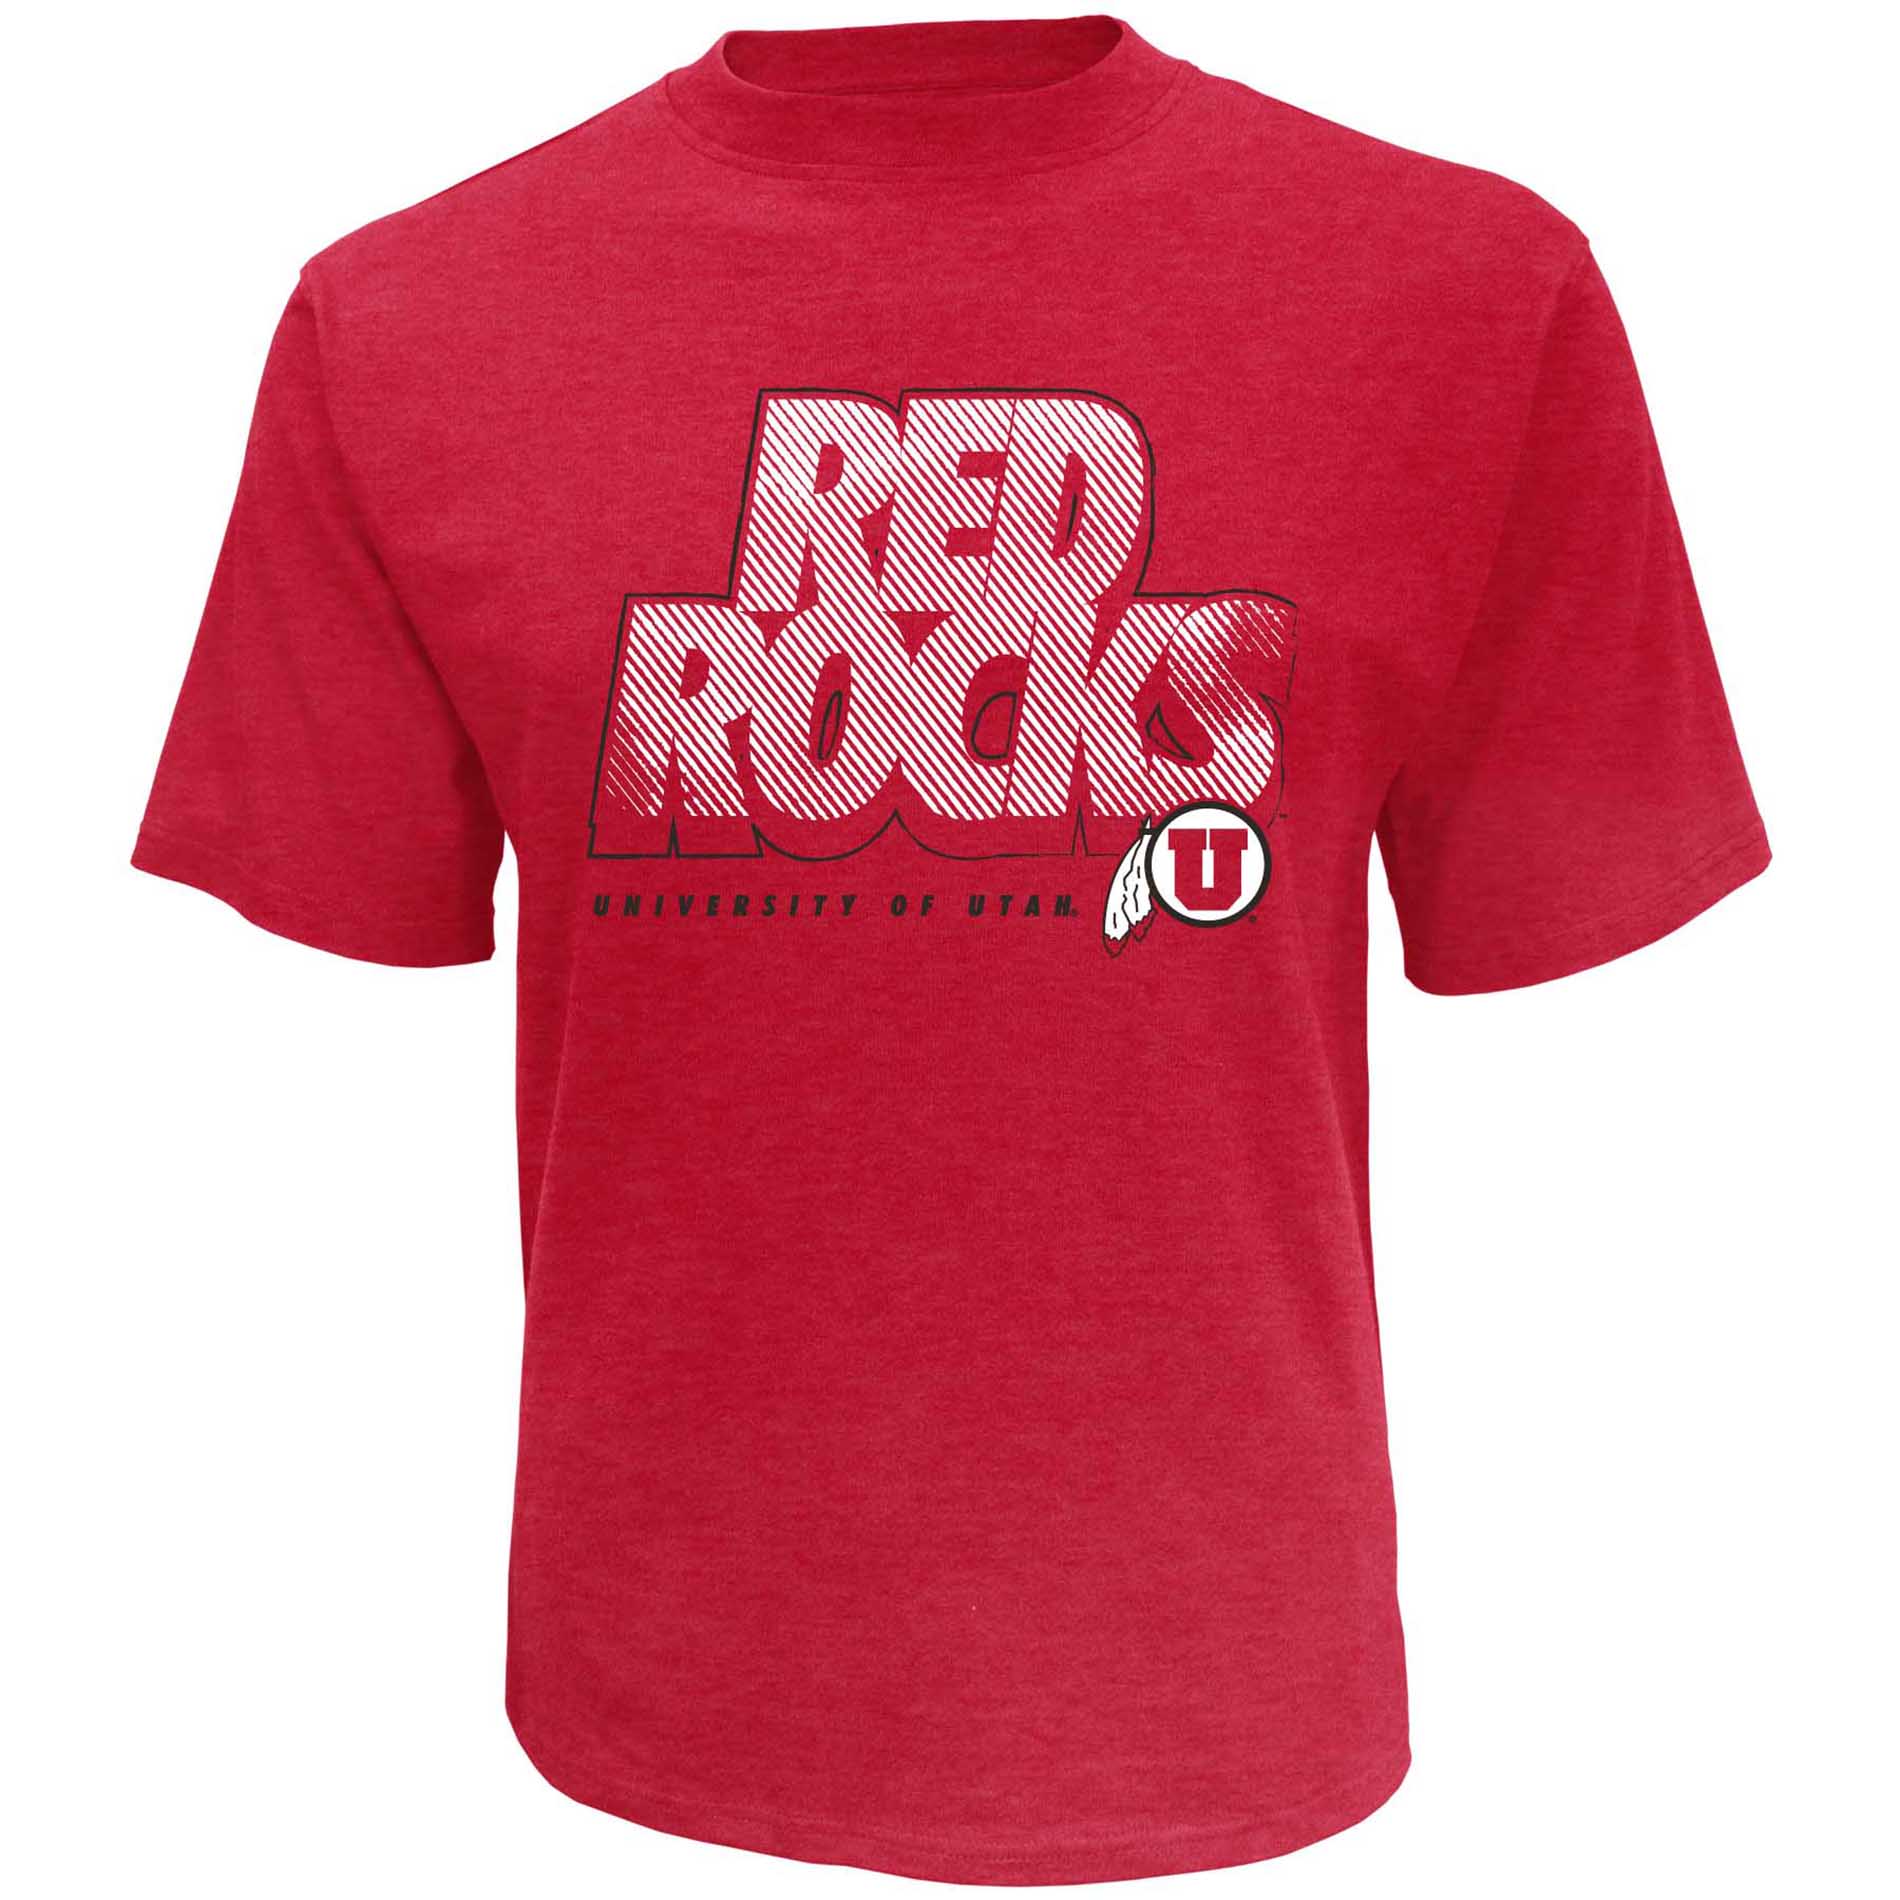 NCAA Men's Big & Tall University of Utah Utes Short Sleeve Print Tee